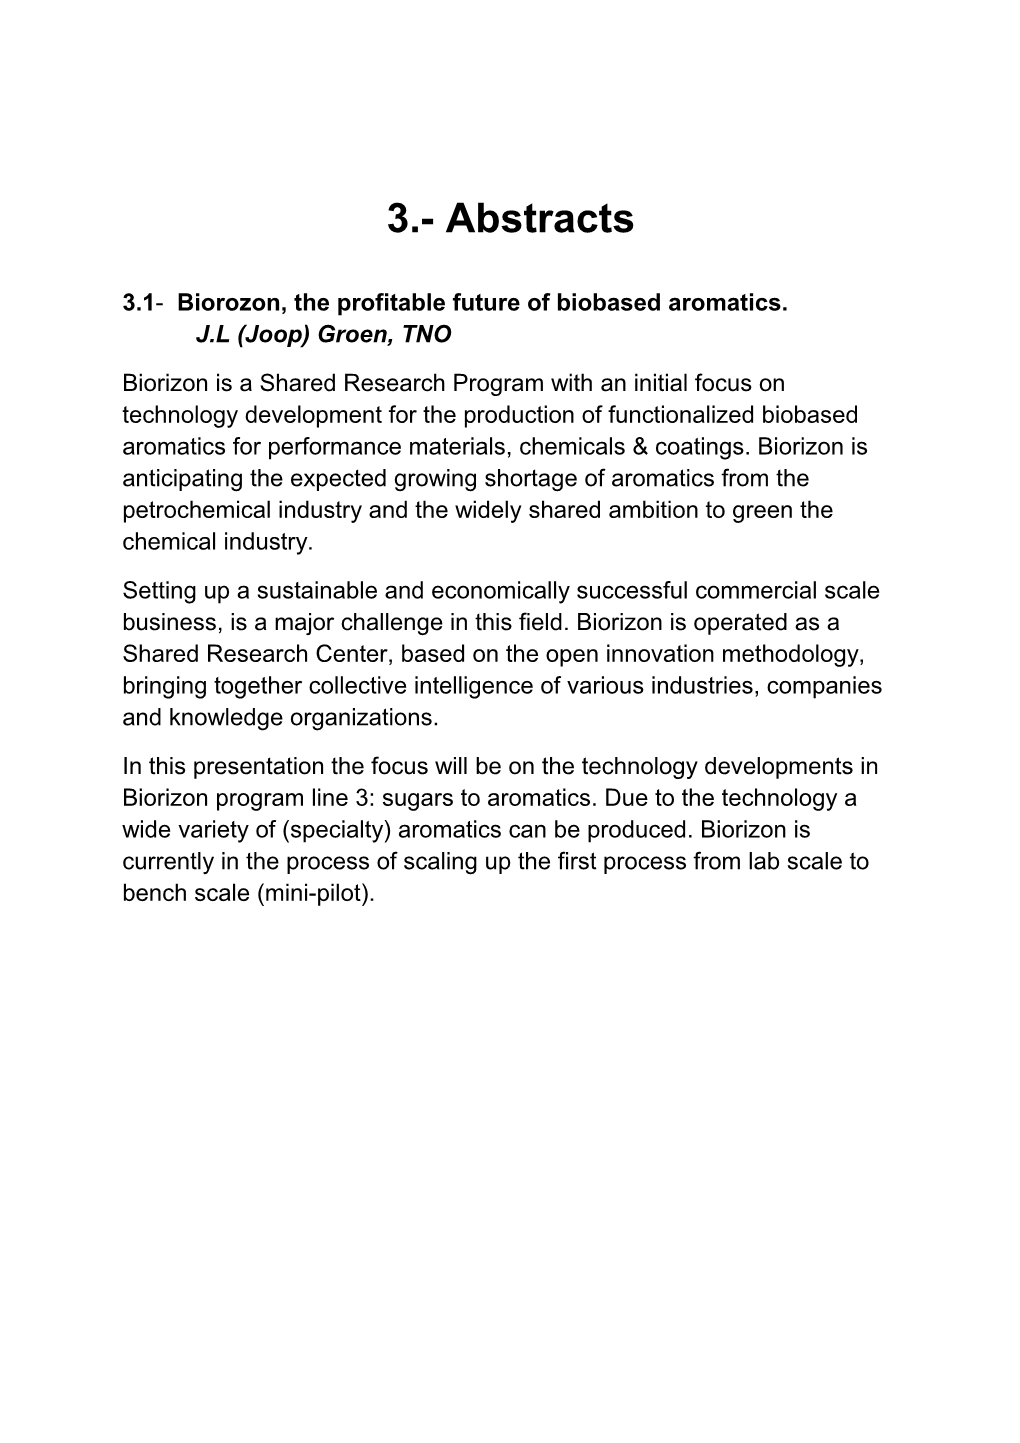 3.1- Biorozon, the Profitable Future of Biobased Aromatics. J.L (Joop) Groen, TNO